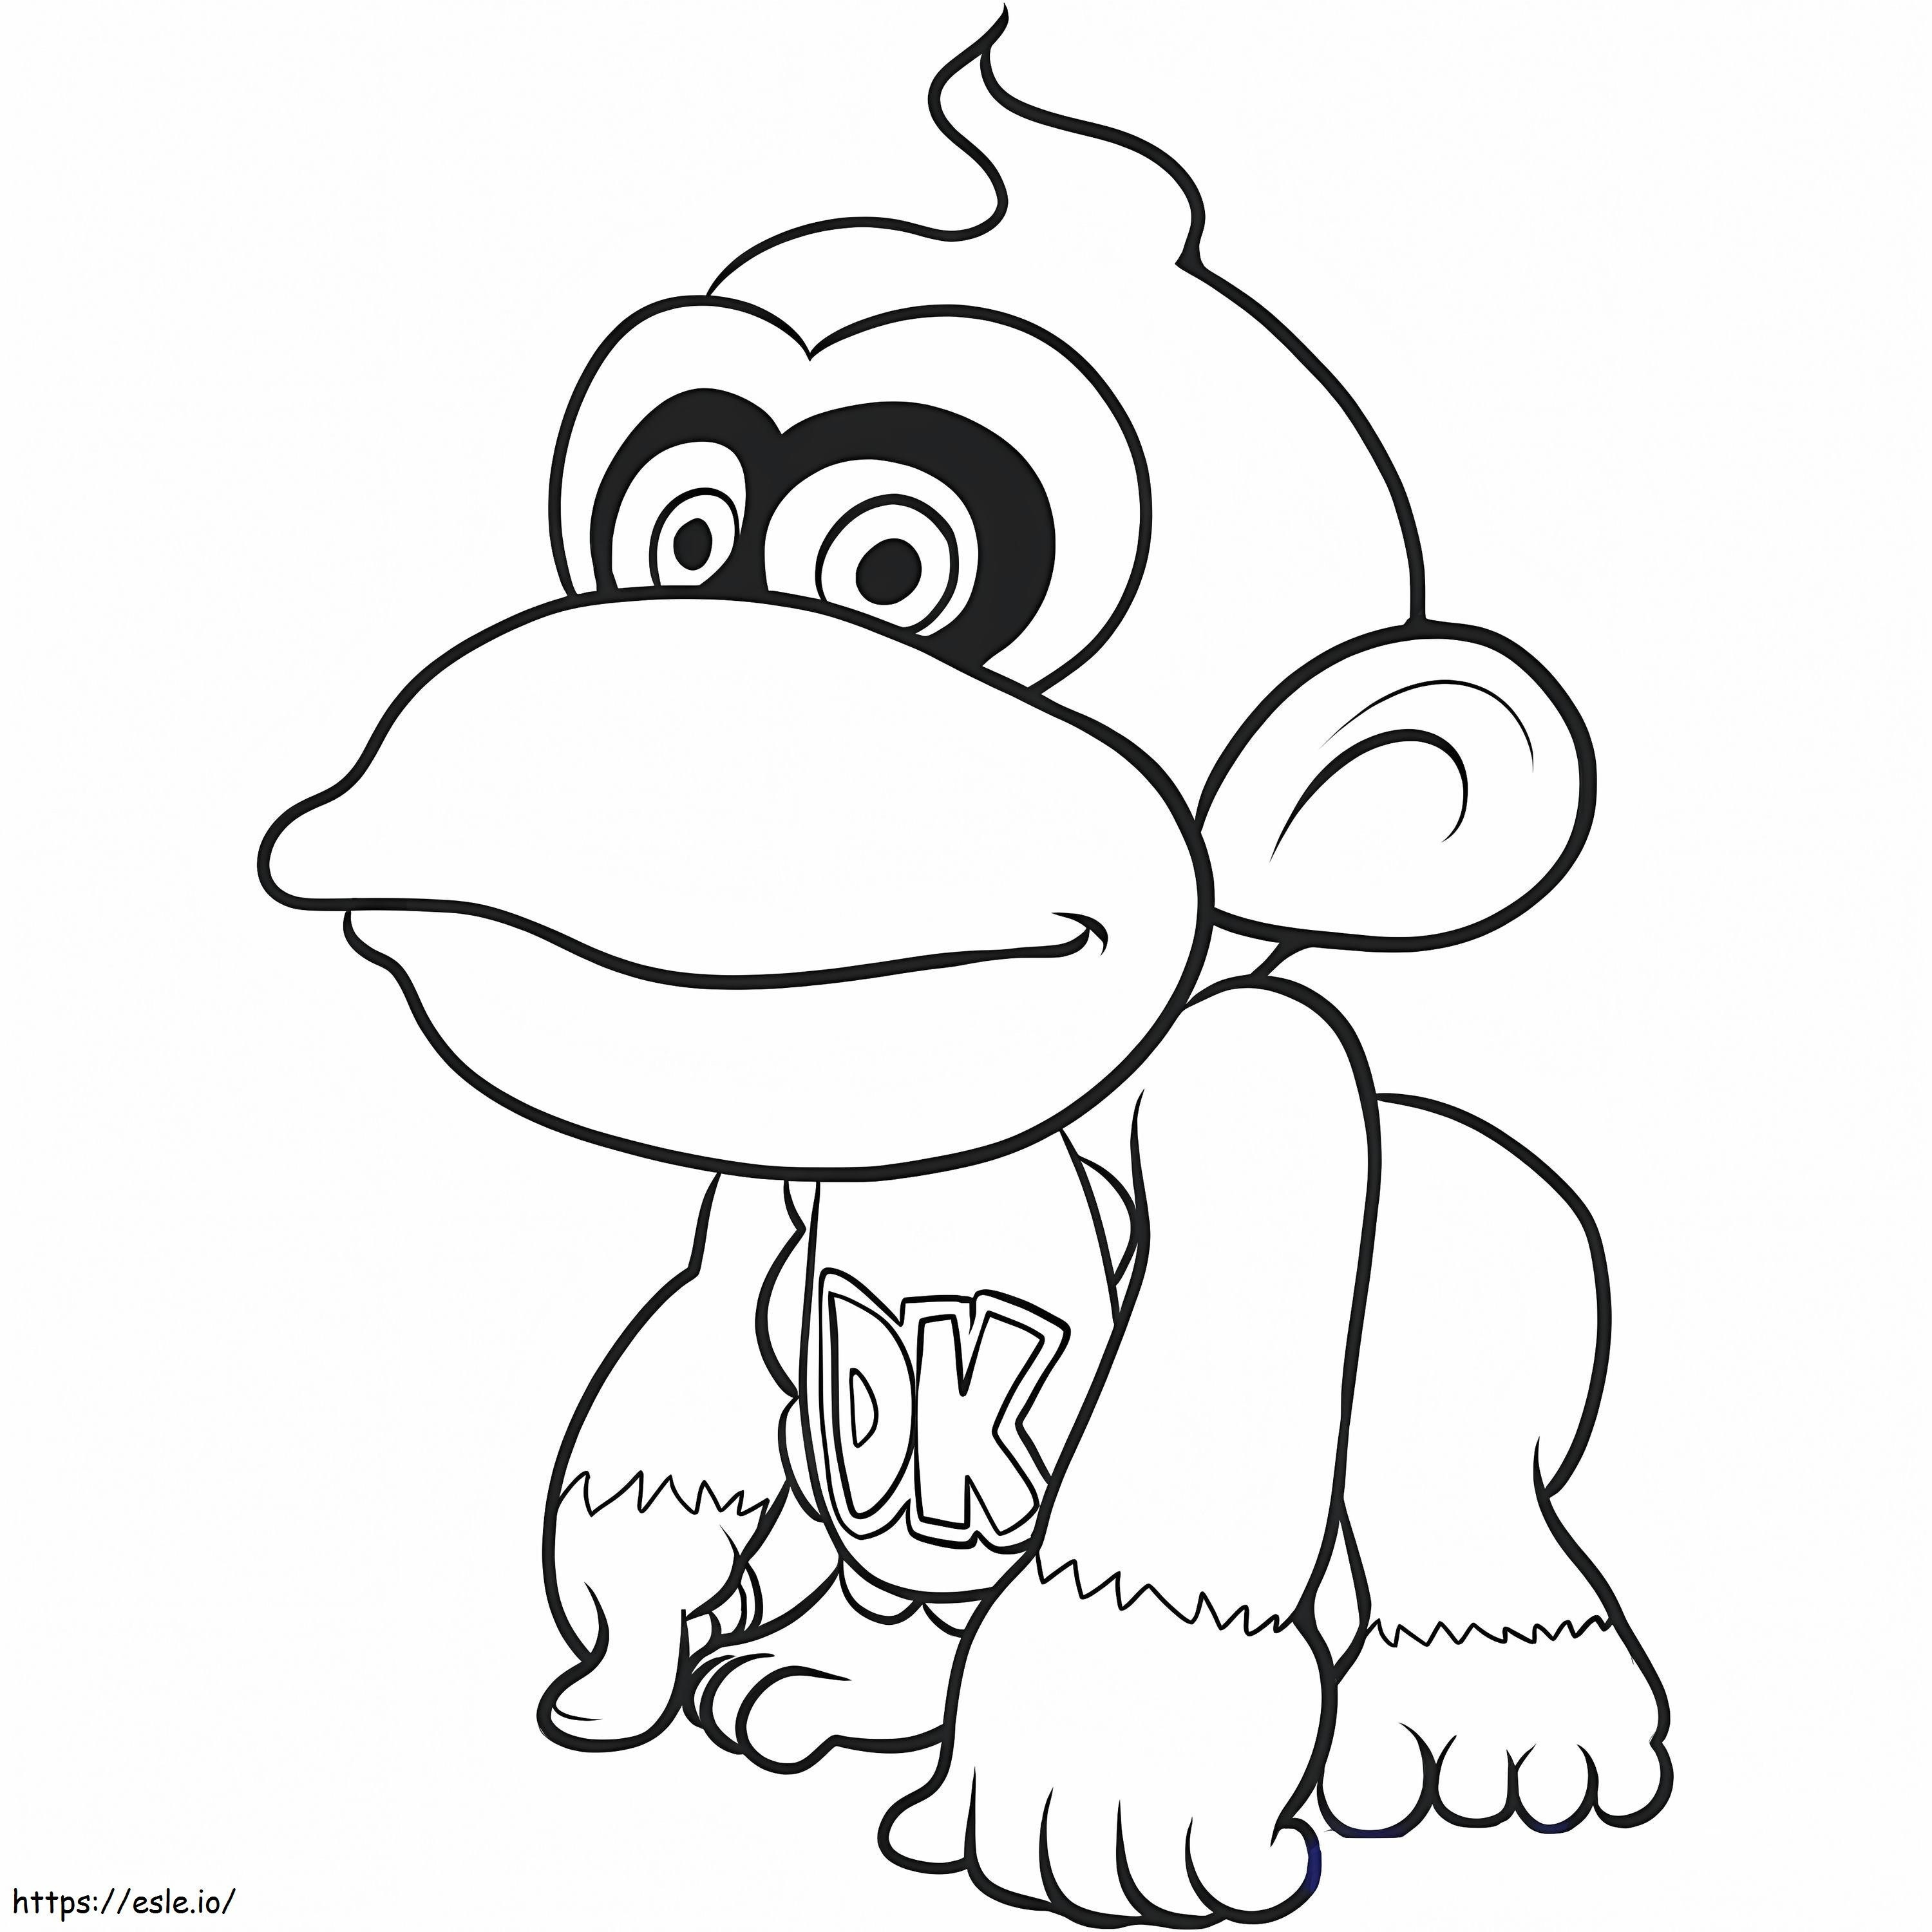 Mały Donkey Kong kolorowanka